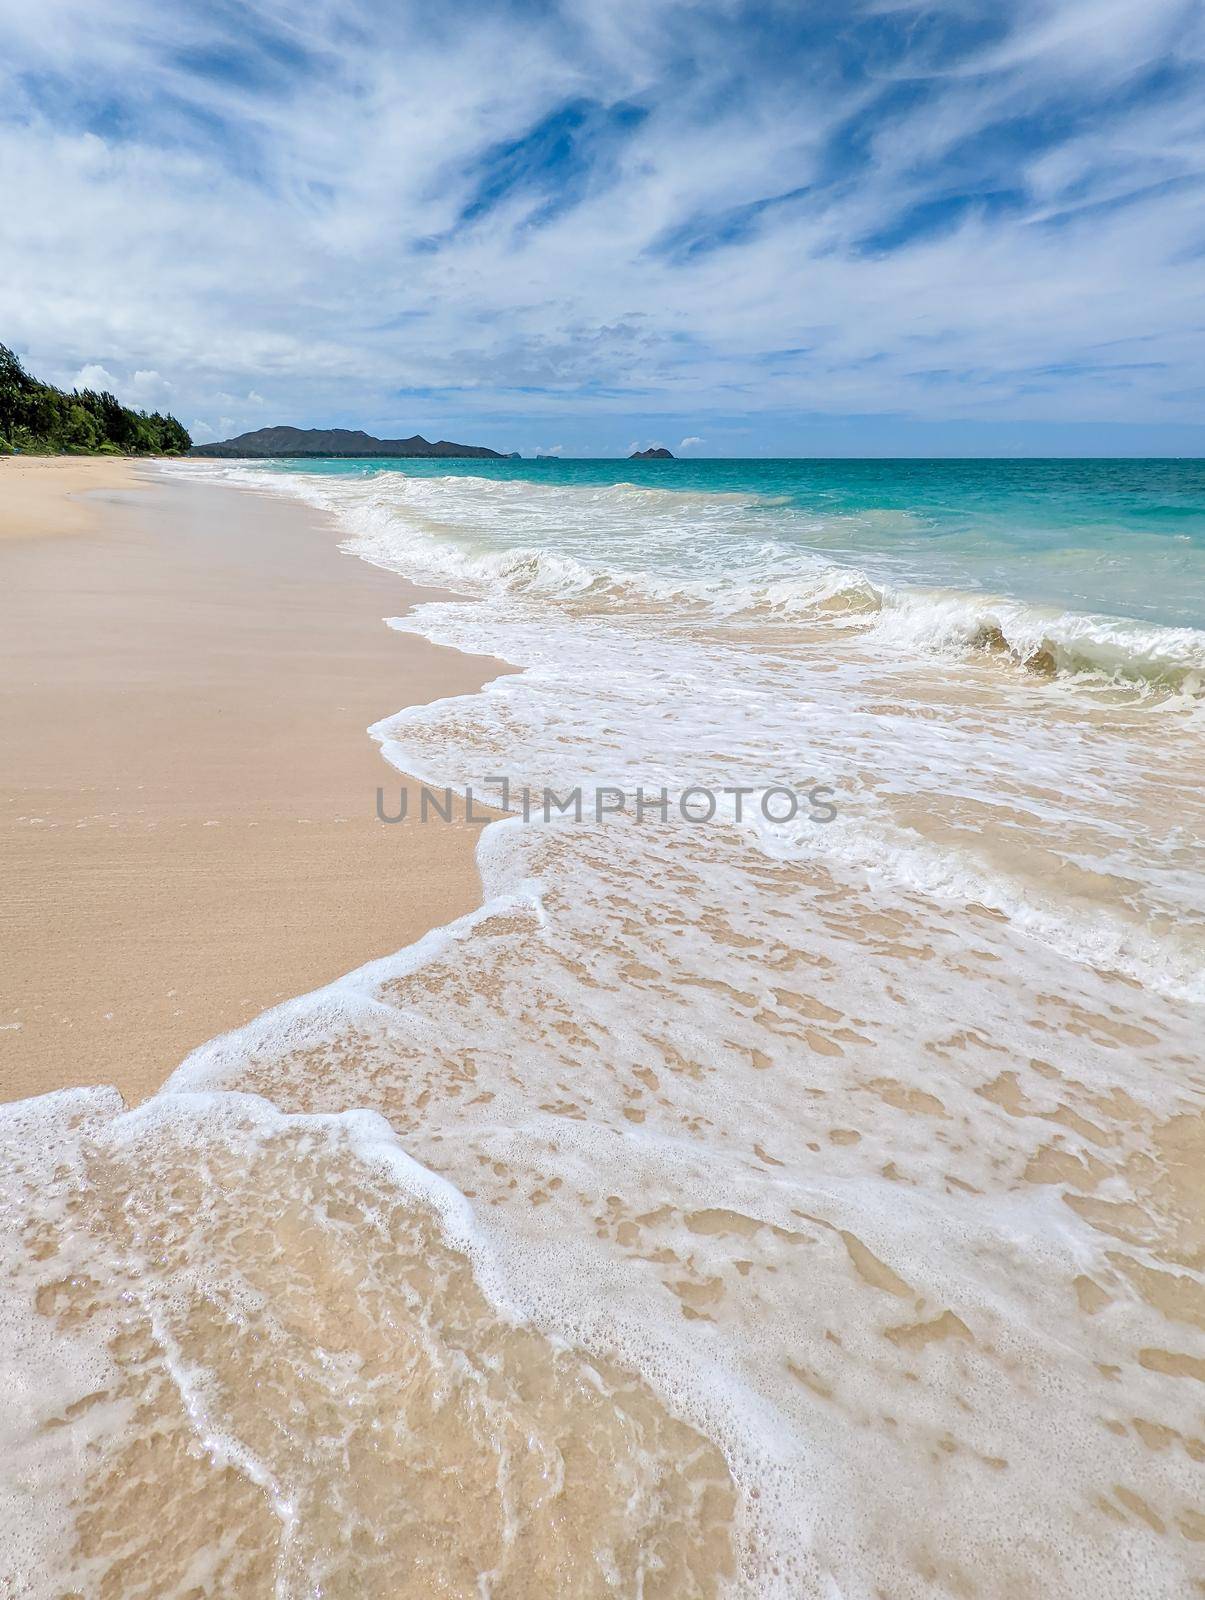 waimanalo beach scenes in oahu hawaii